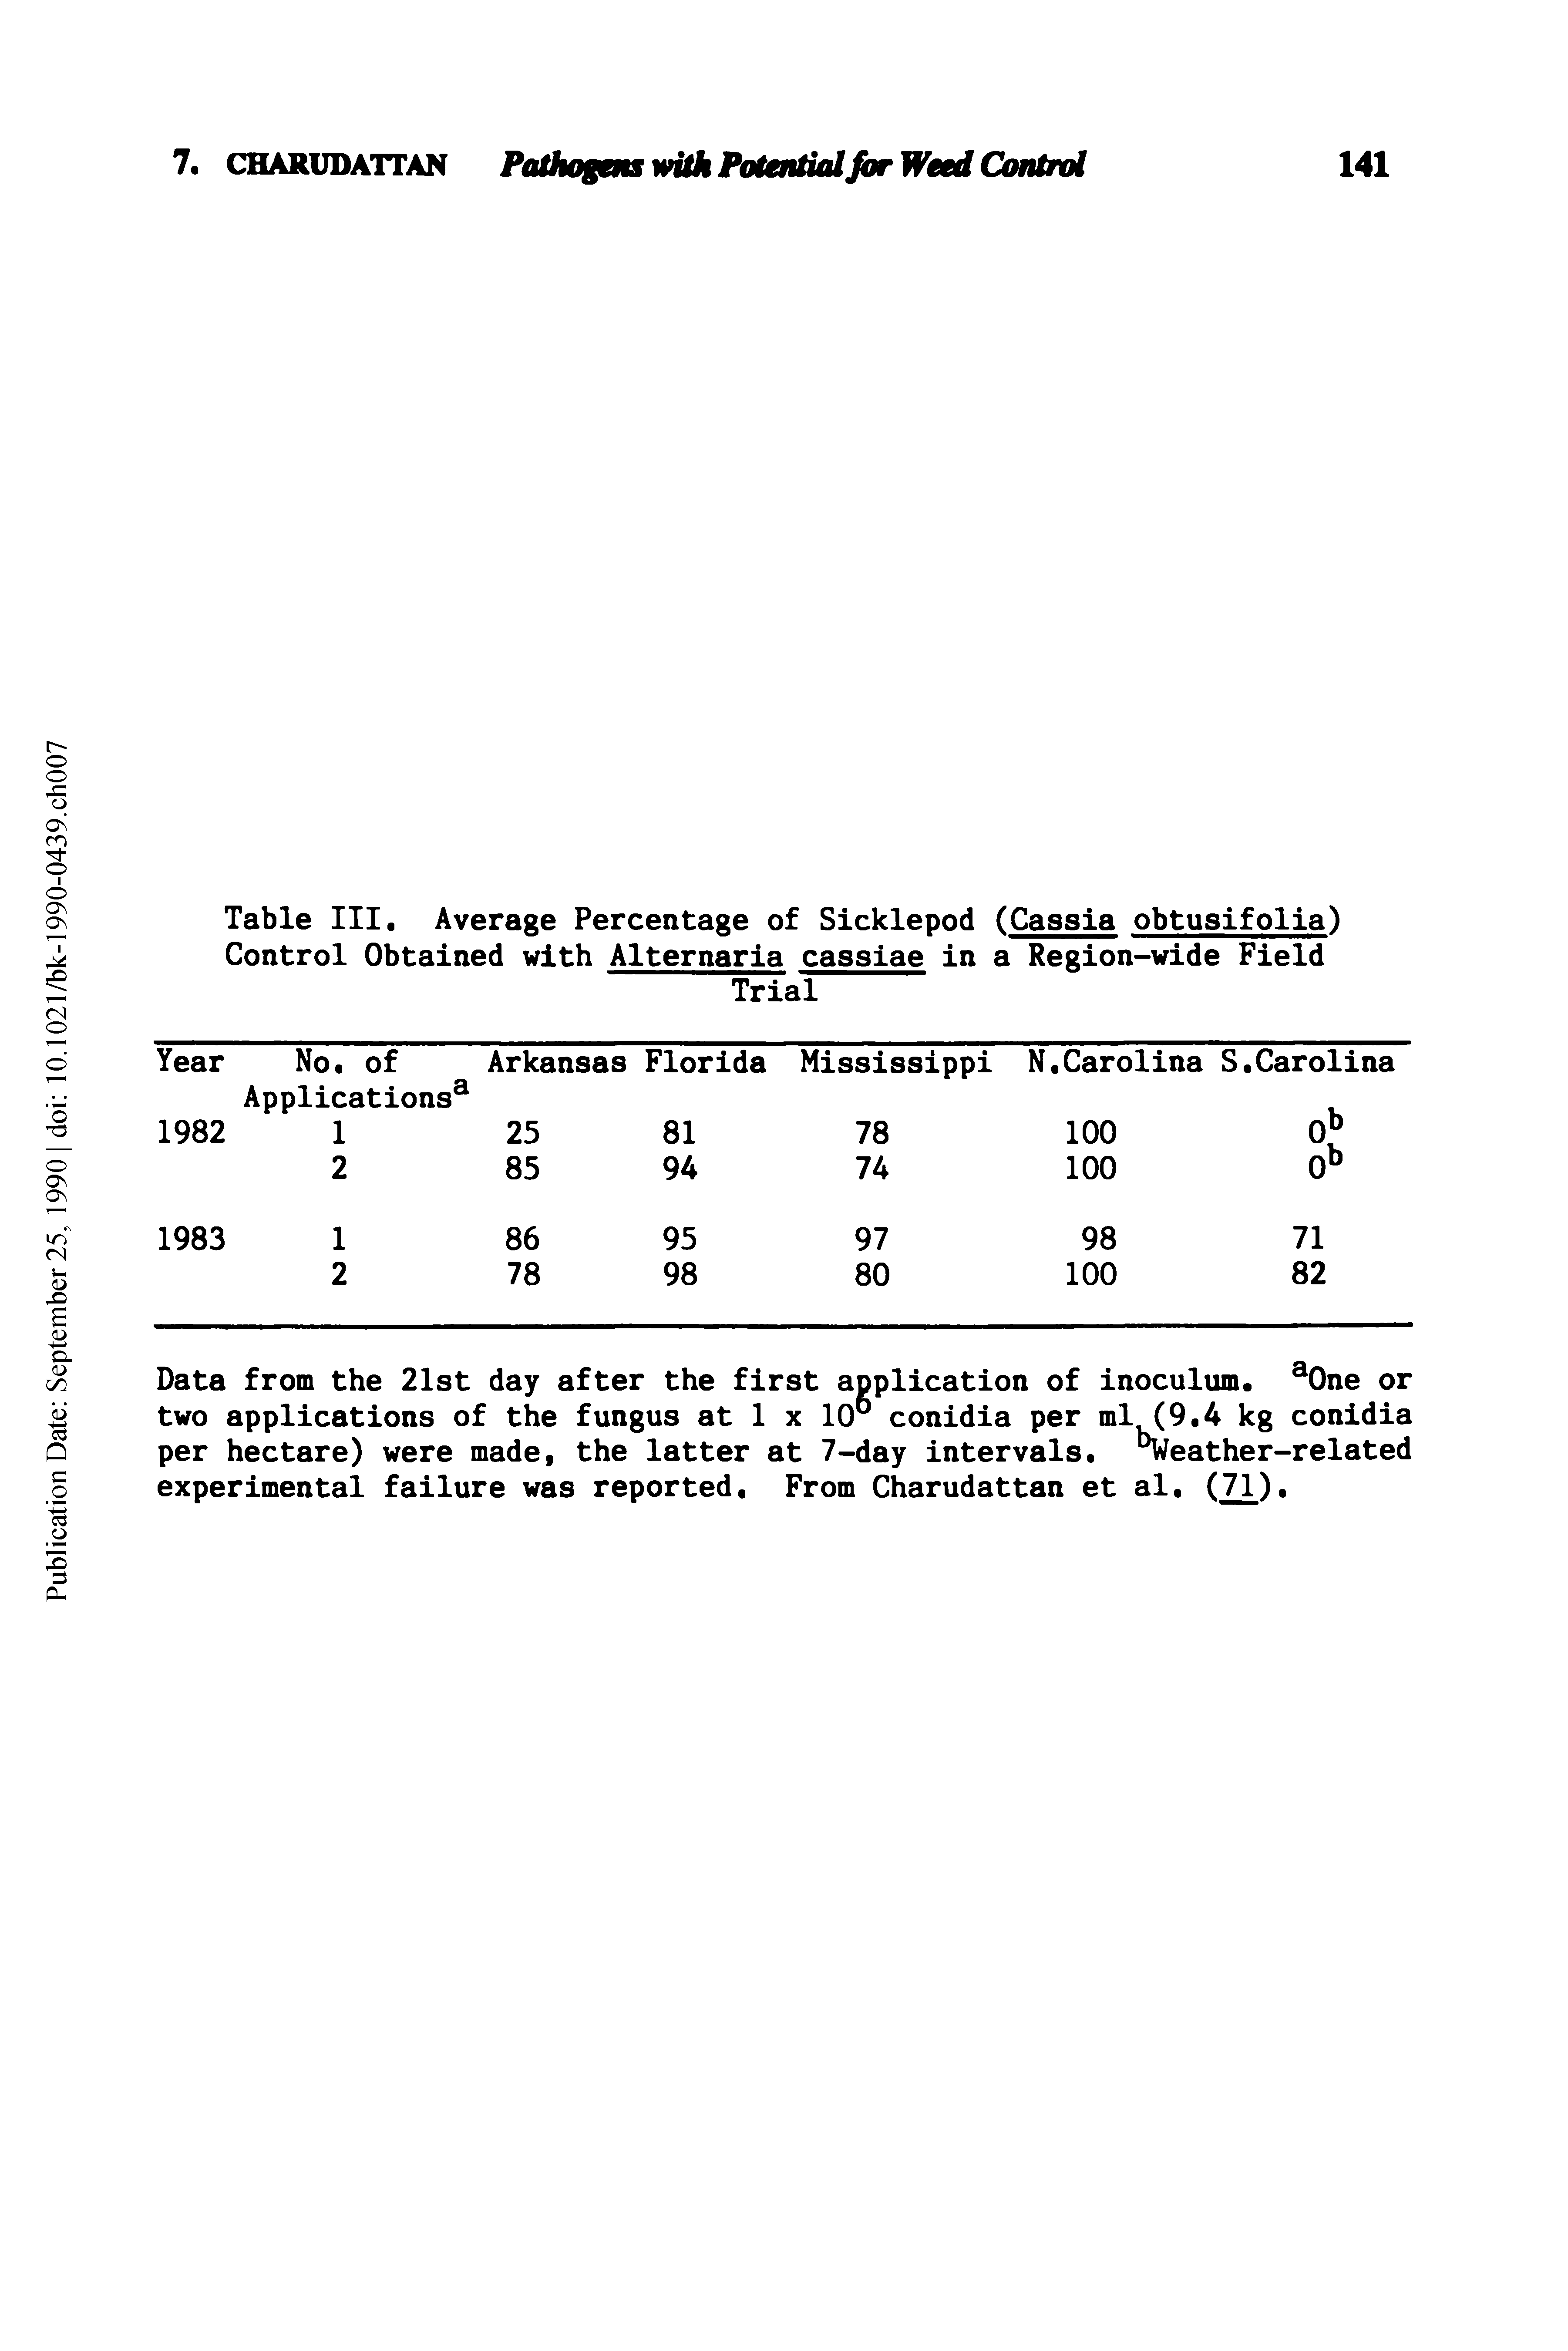 Table III. Average Percentage of Sicklepod (Cassia obtusifolia) Control Obtained with Alternaria cassiae in a Region-wide Field...